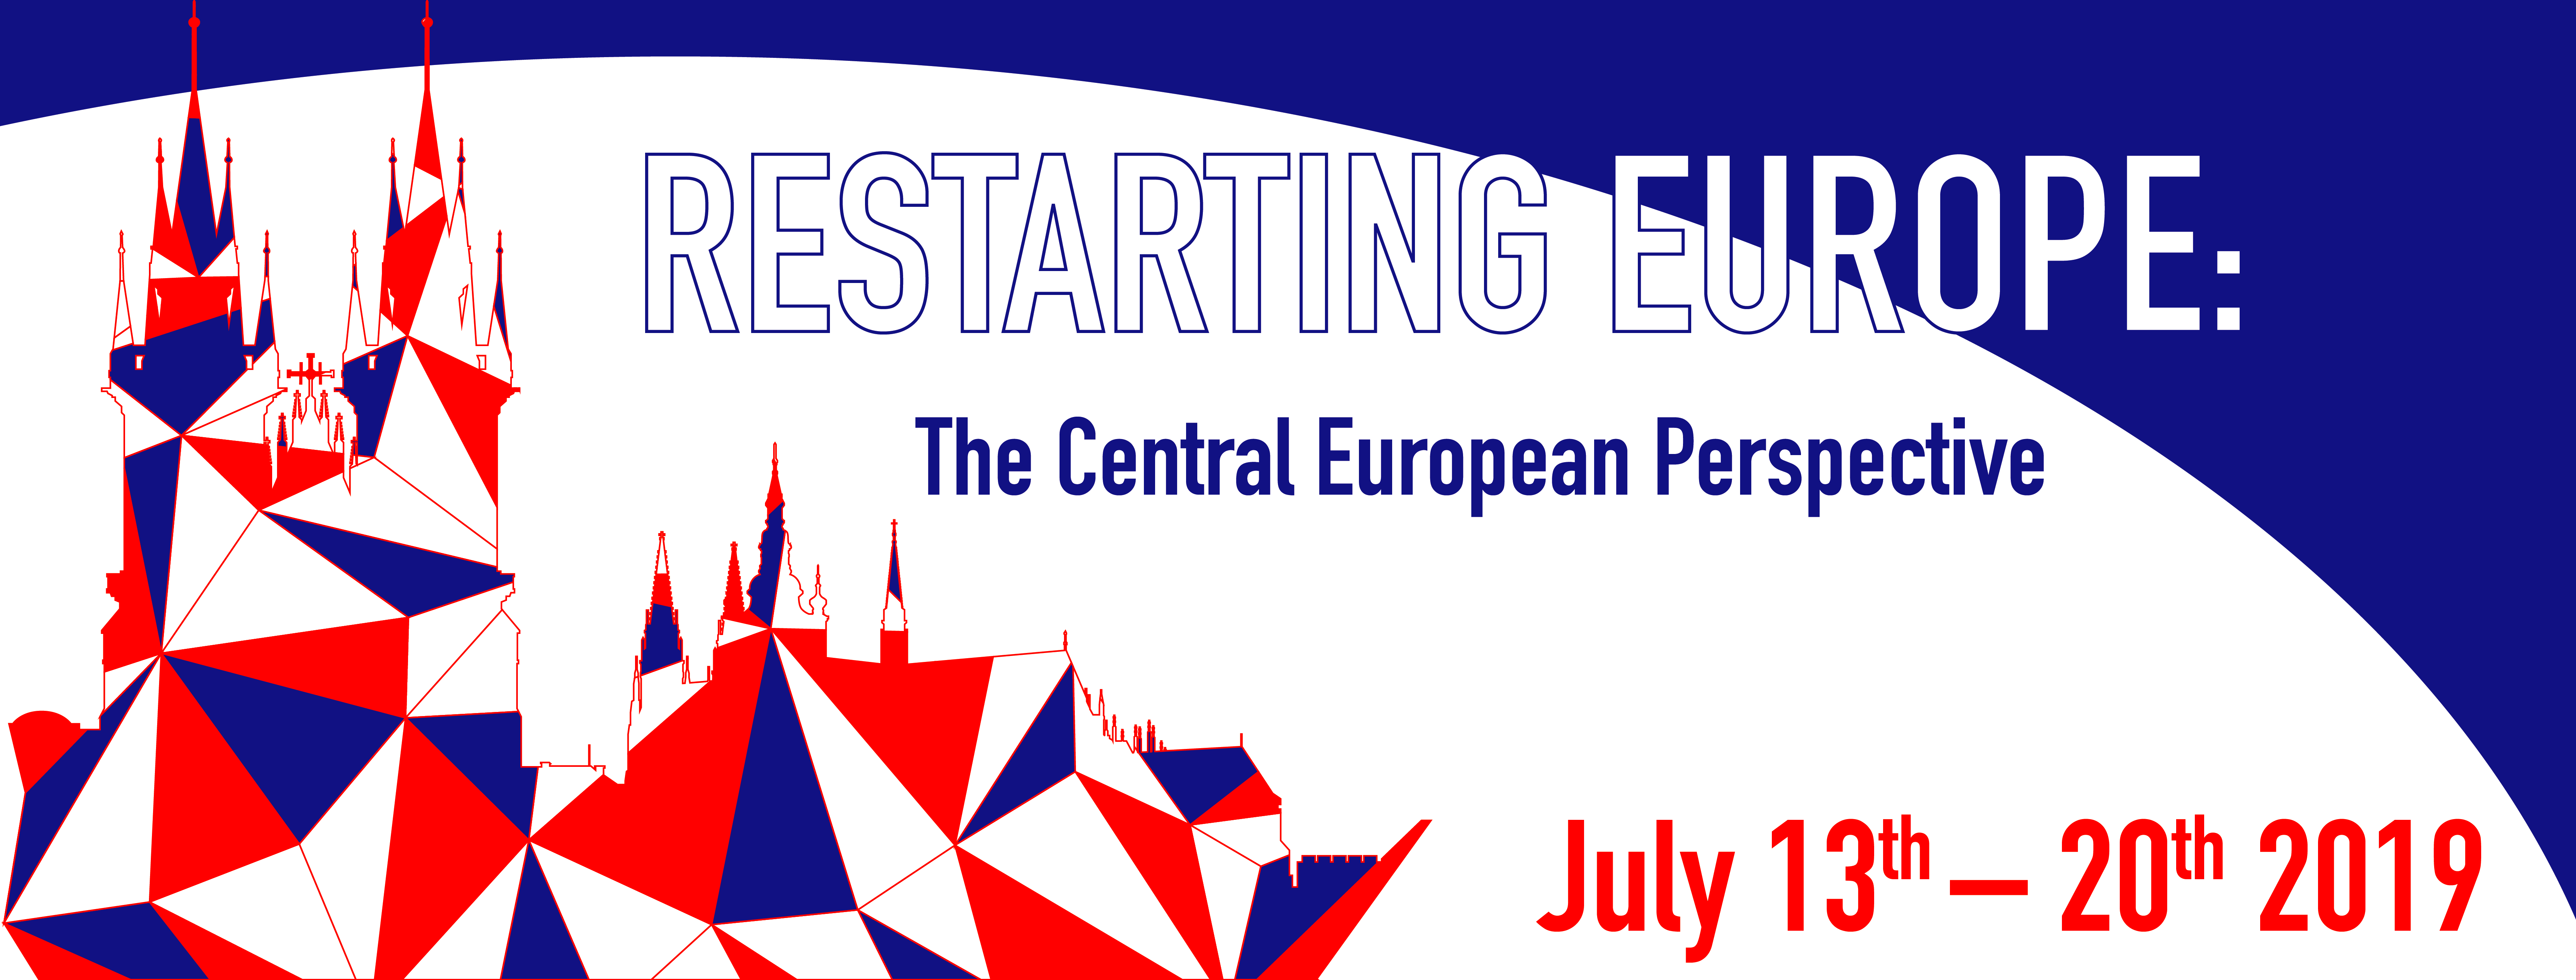 Restarting Europe - The Central European Perspective: European Summer School 2019